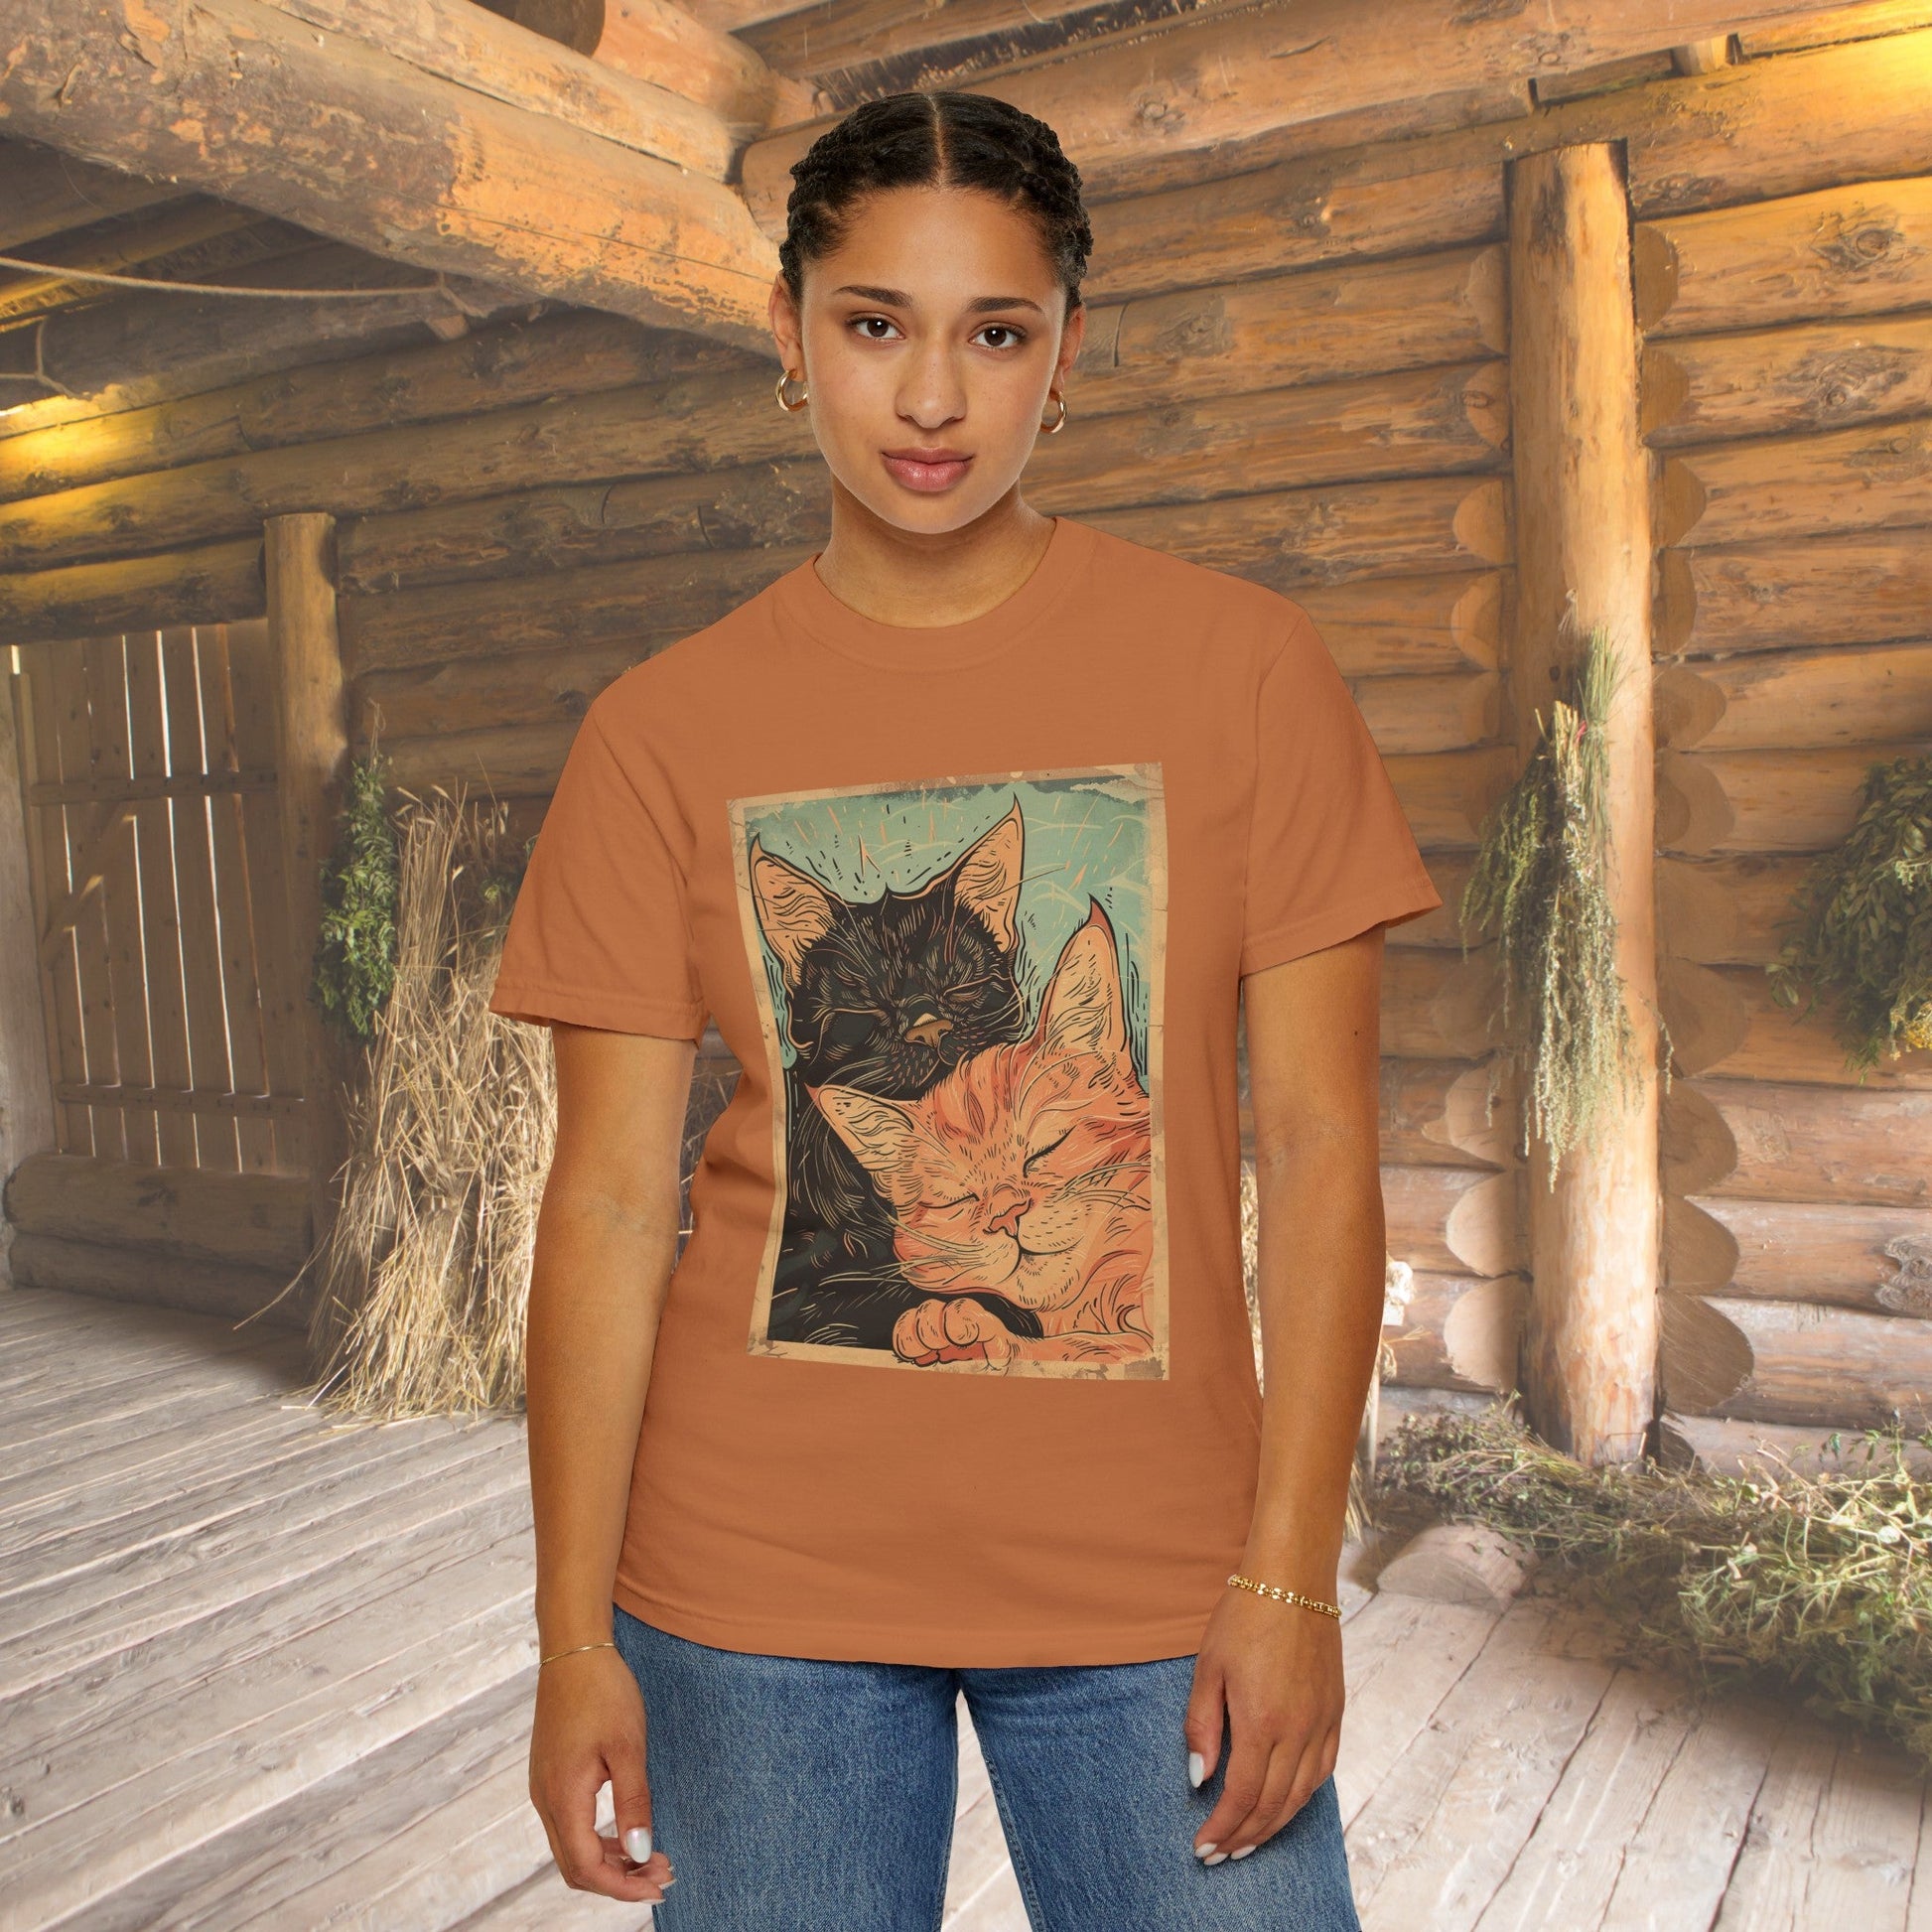 Vintage Cat Poster T-shirt, Cute Black Cat Tabby Cat Shirt, Unisex Tee for Cat Lover - FlooredByArt